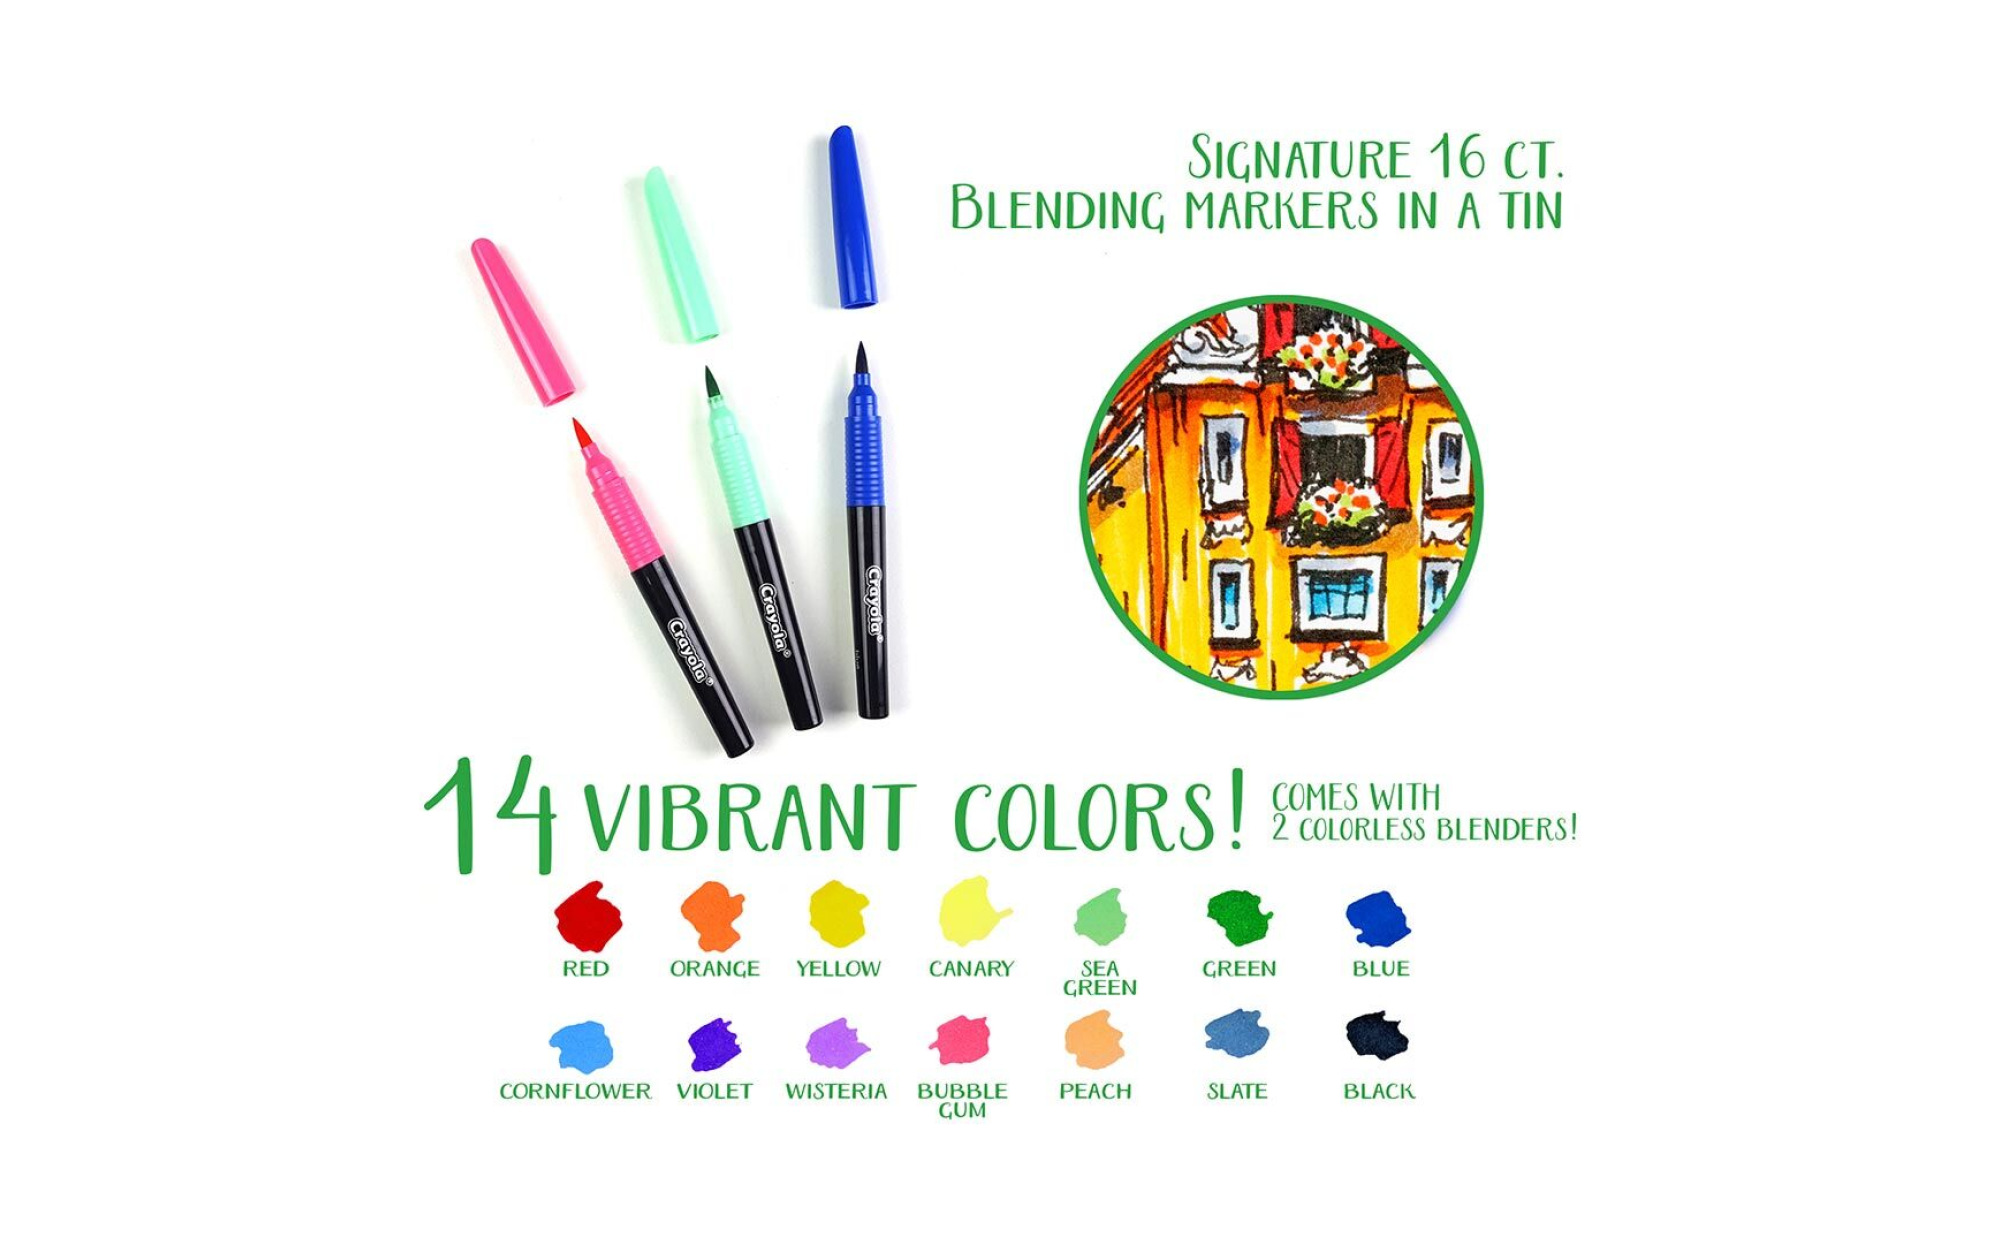 Crayola Signature Blending Marker Set